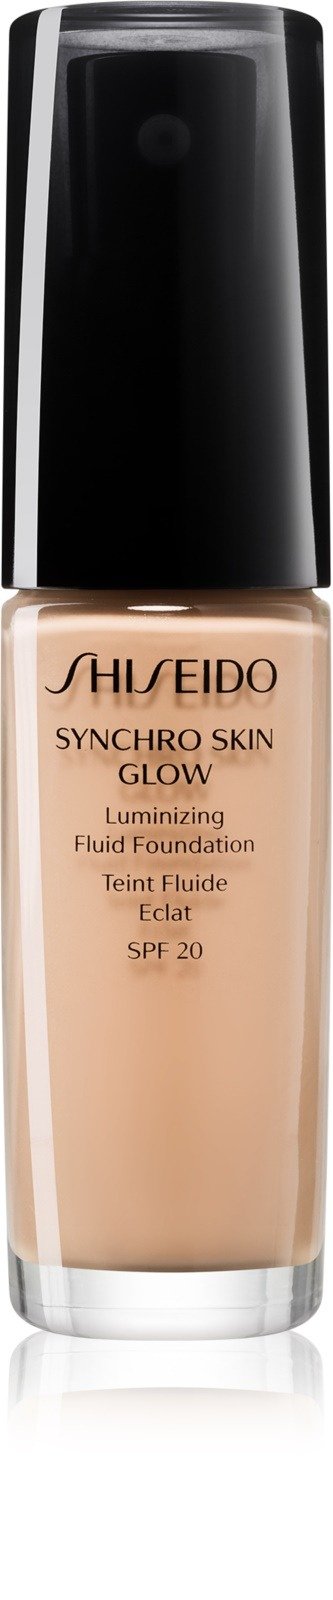 Synchro Skin Glow 粉底液